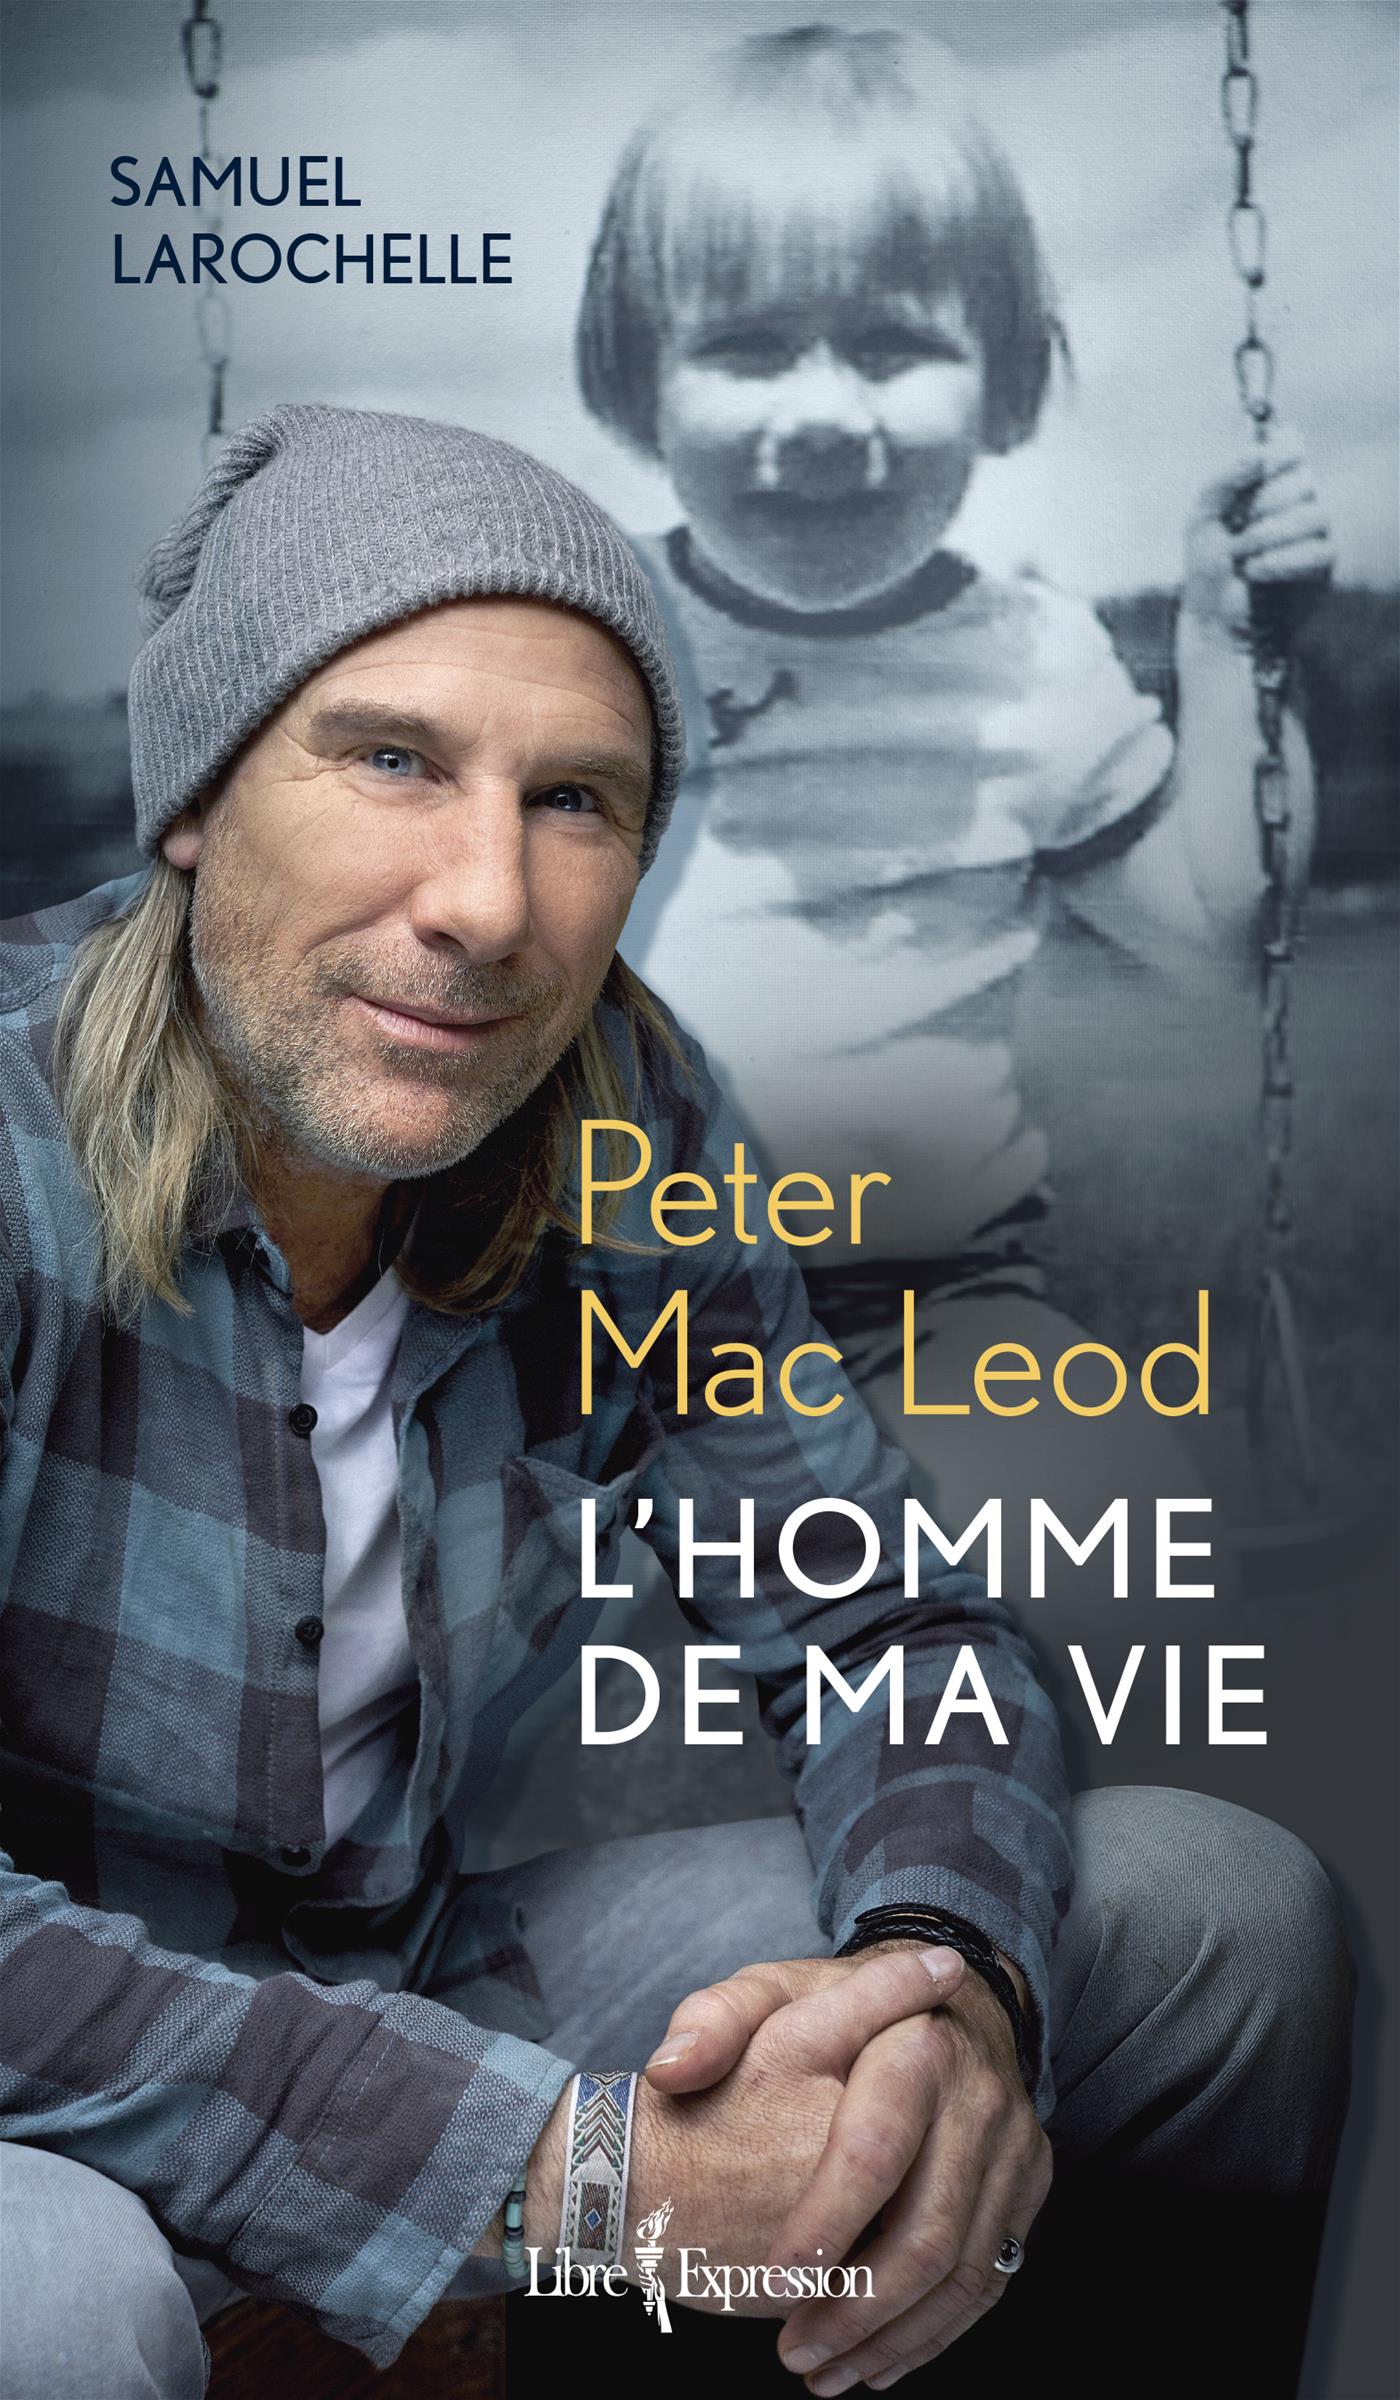 Peter Mac Leod